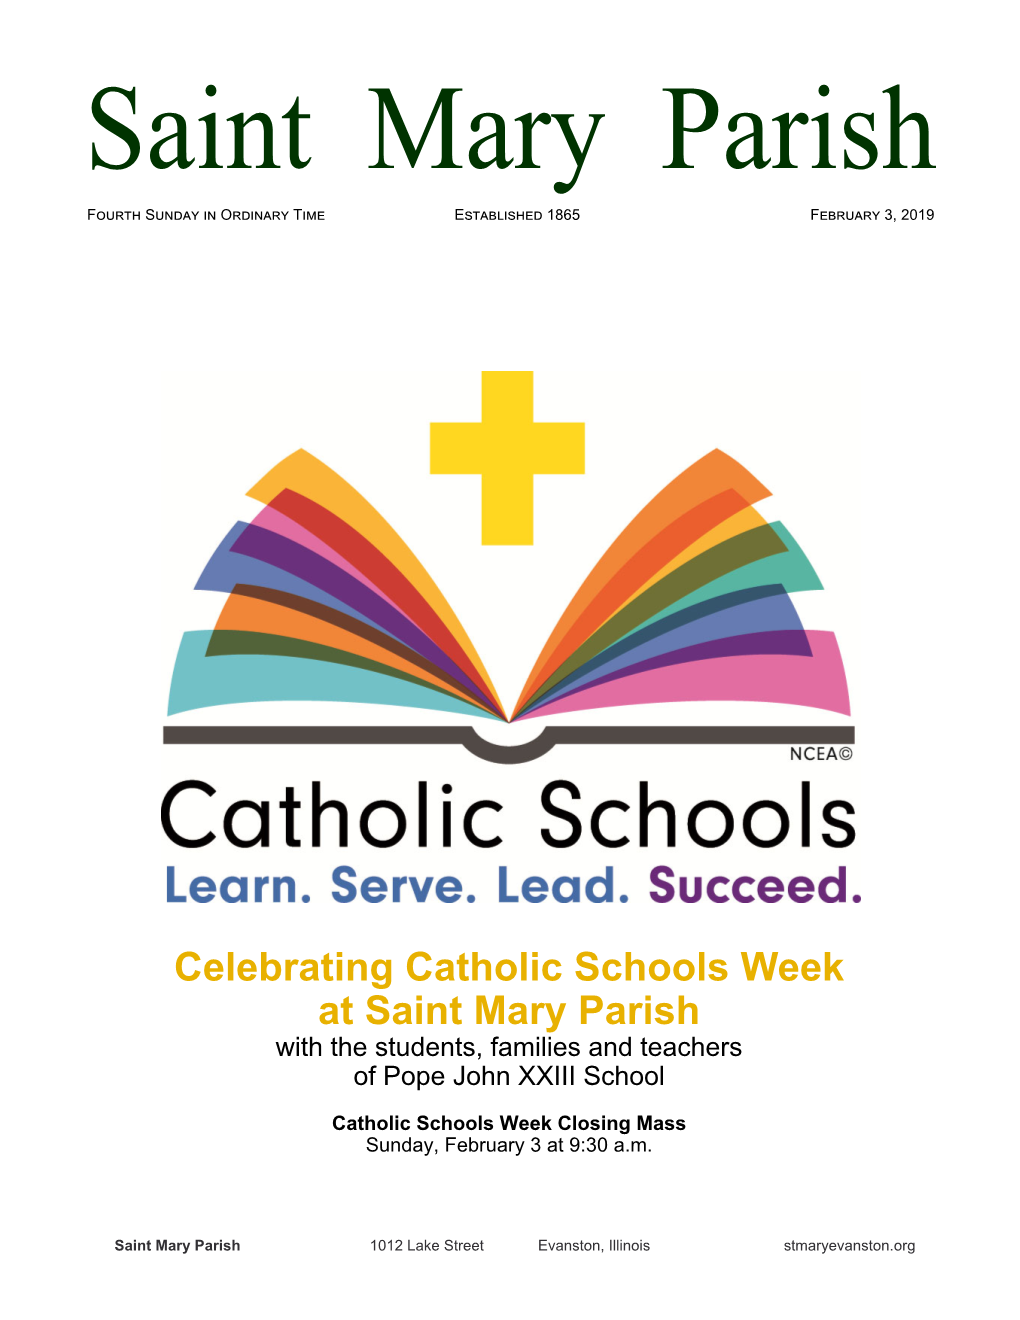 Celebrating Catholic Schools Week at Saint Mary Parish with the Students, Families and Teachers of Pope John XXIII School